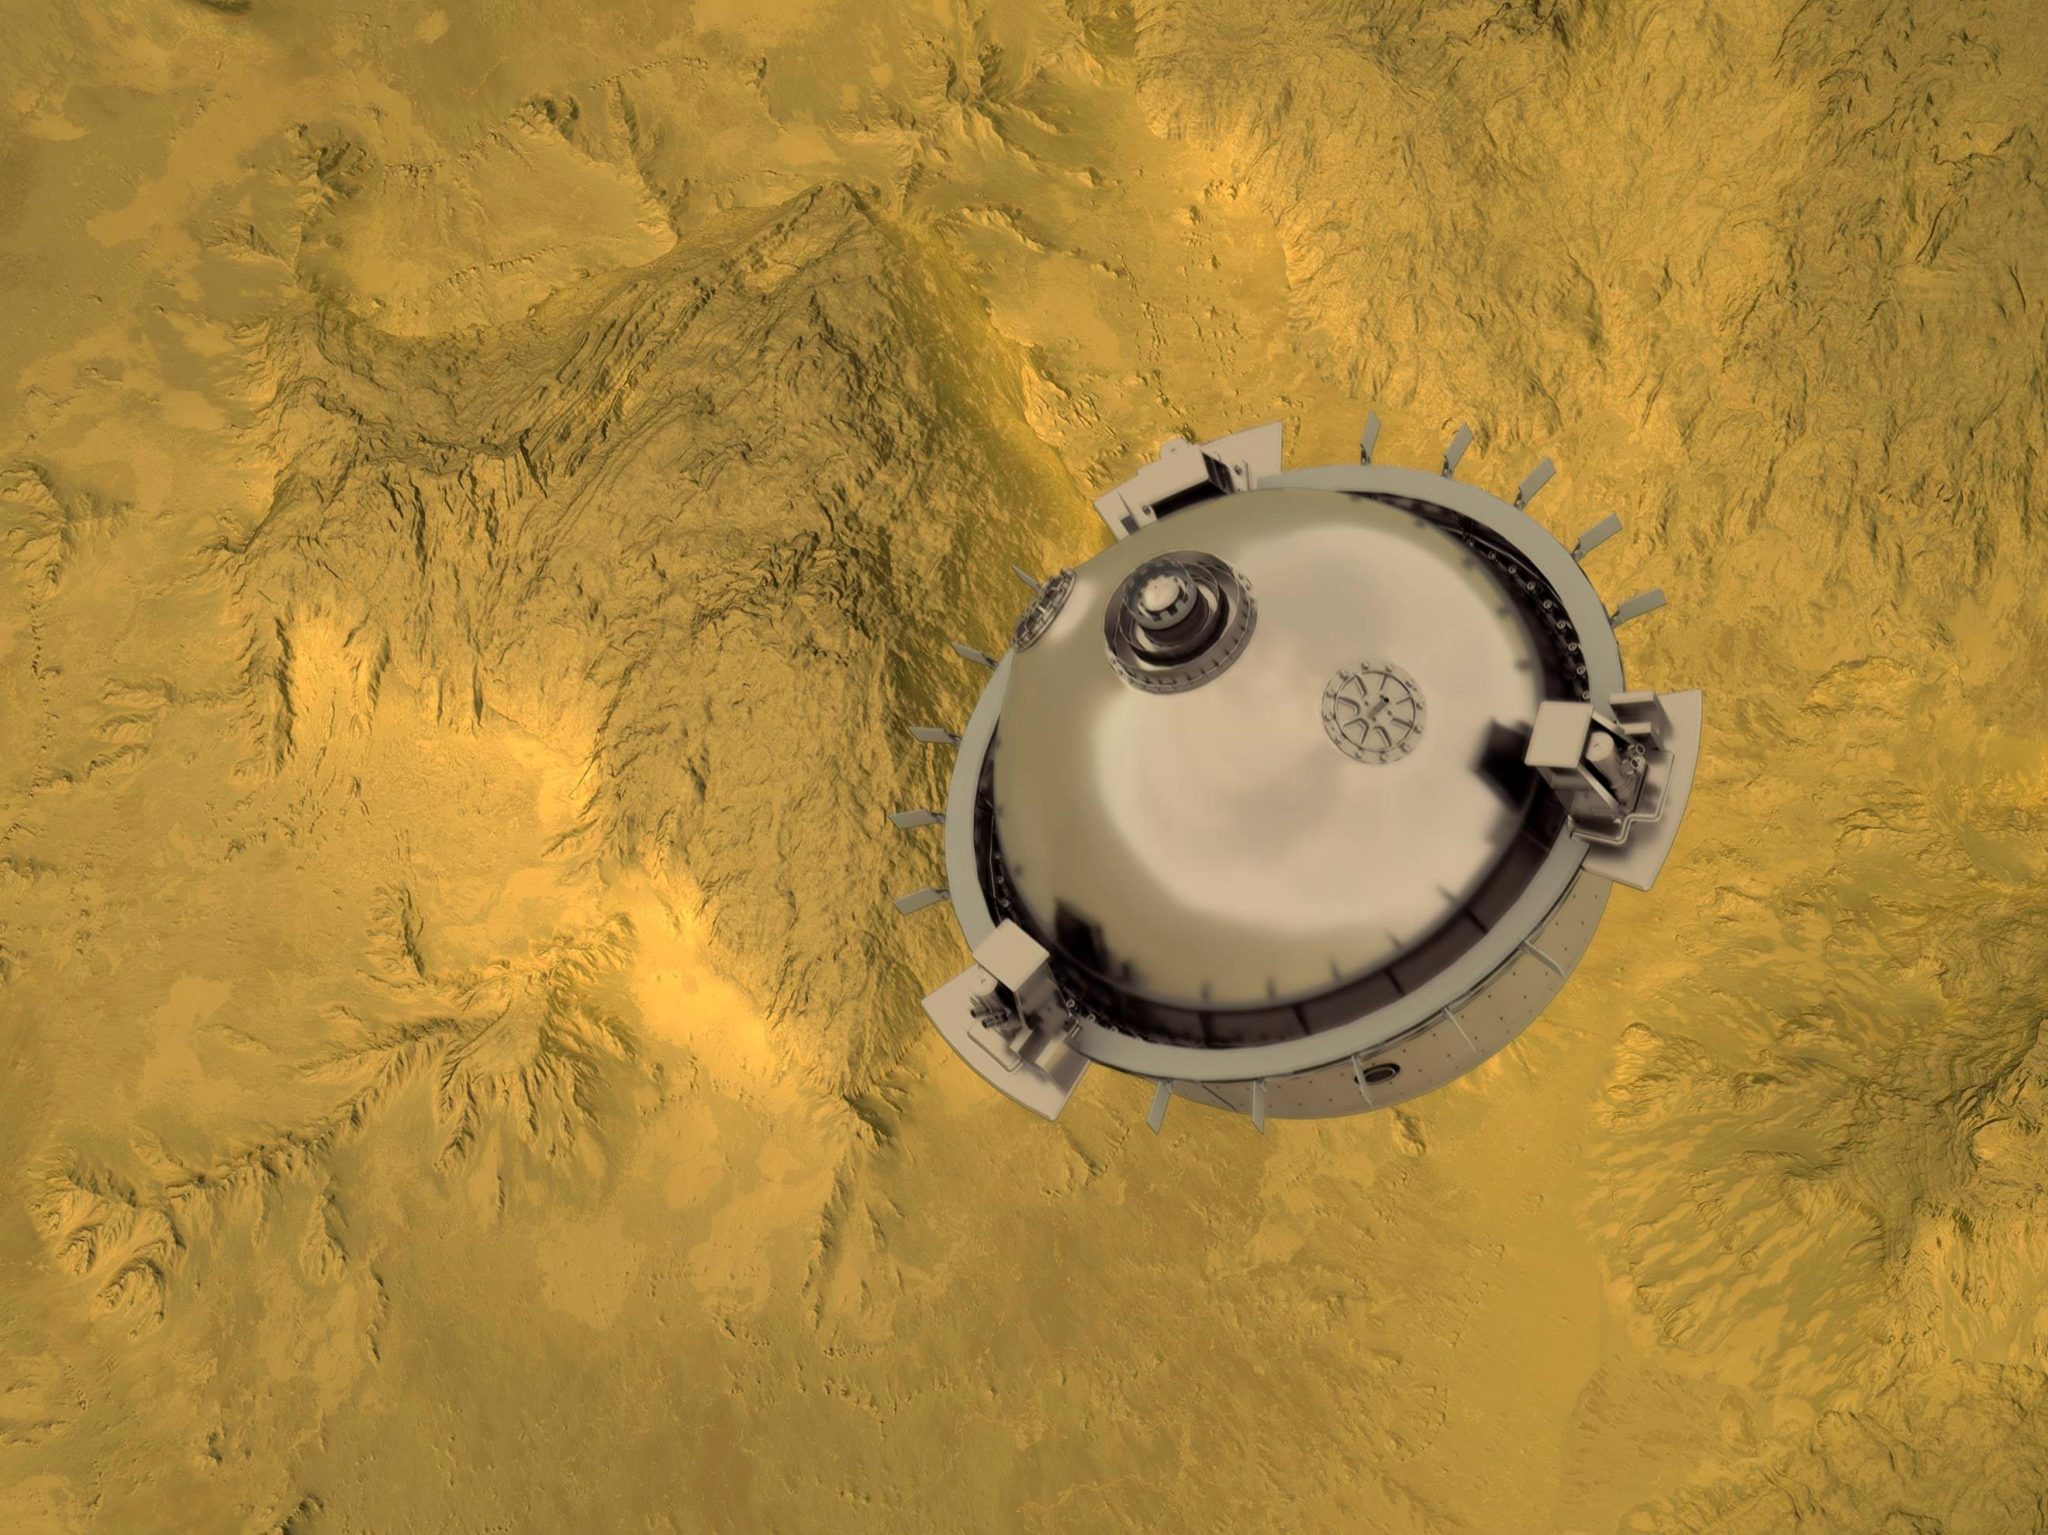 DAVINCI-sonde nær Venus-overflaten